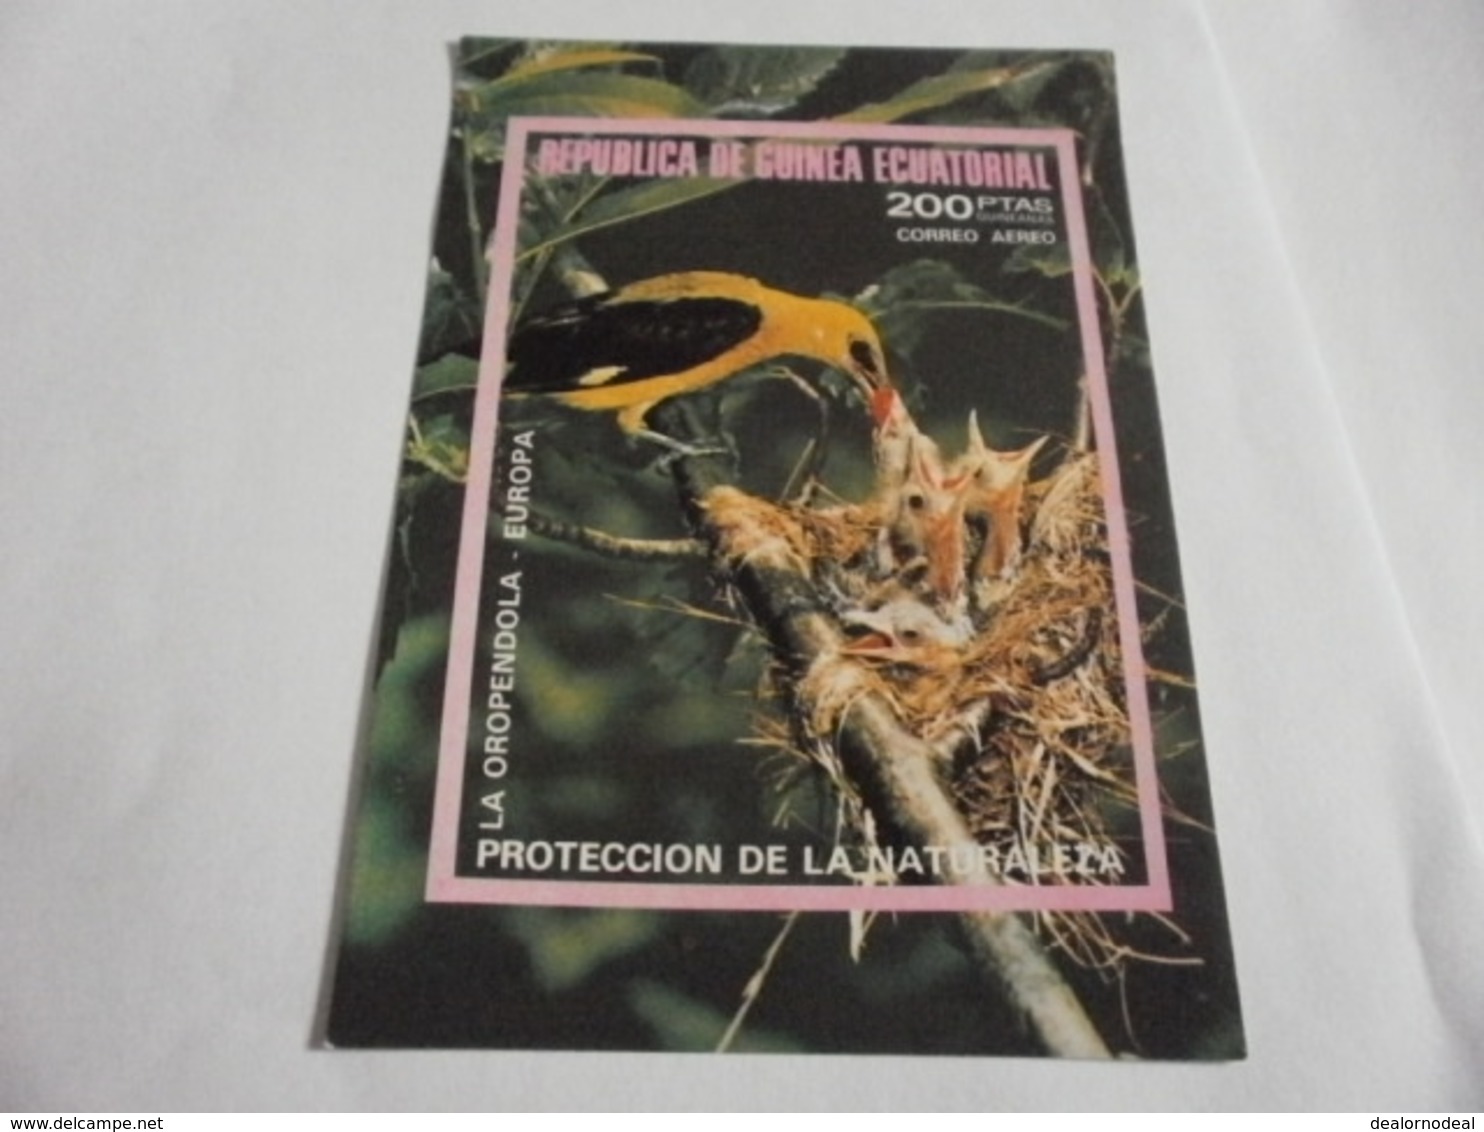 Miniature Sheet Imperf Birds Nature Protection - Guinea Ecuatorial